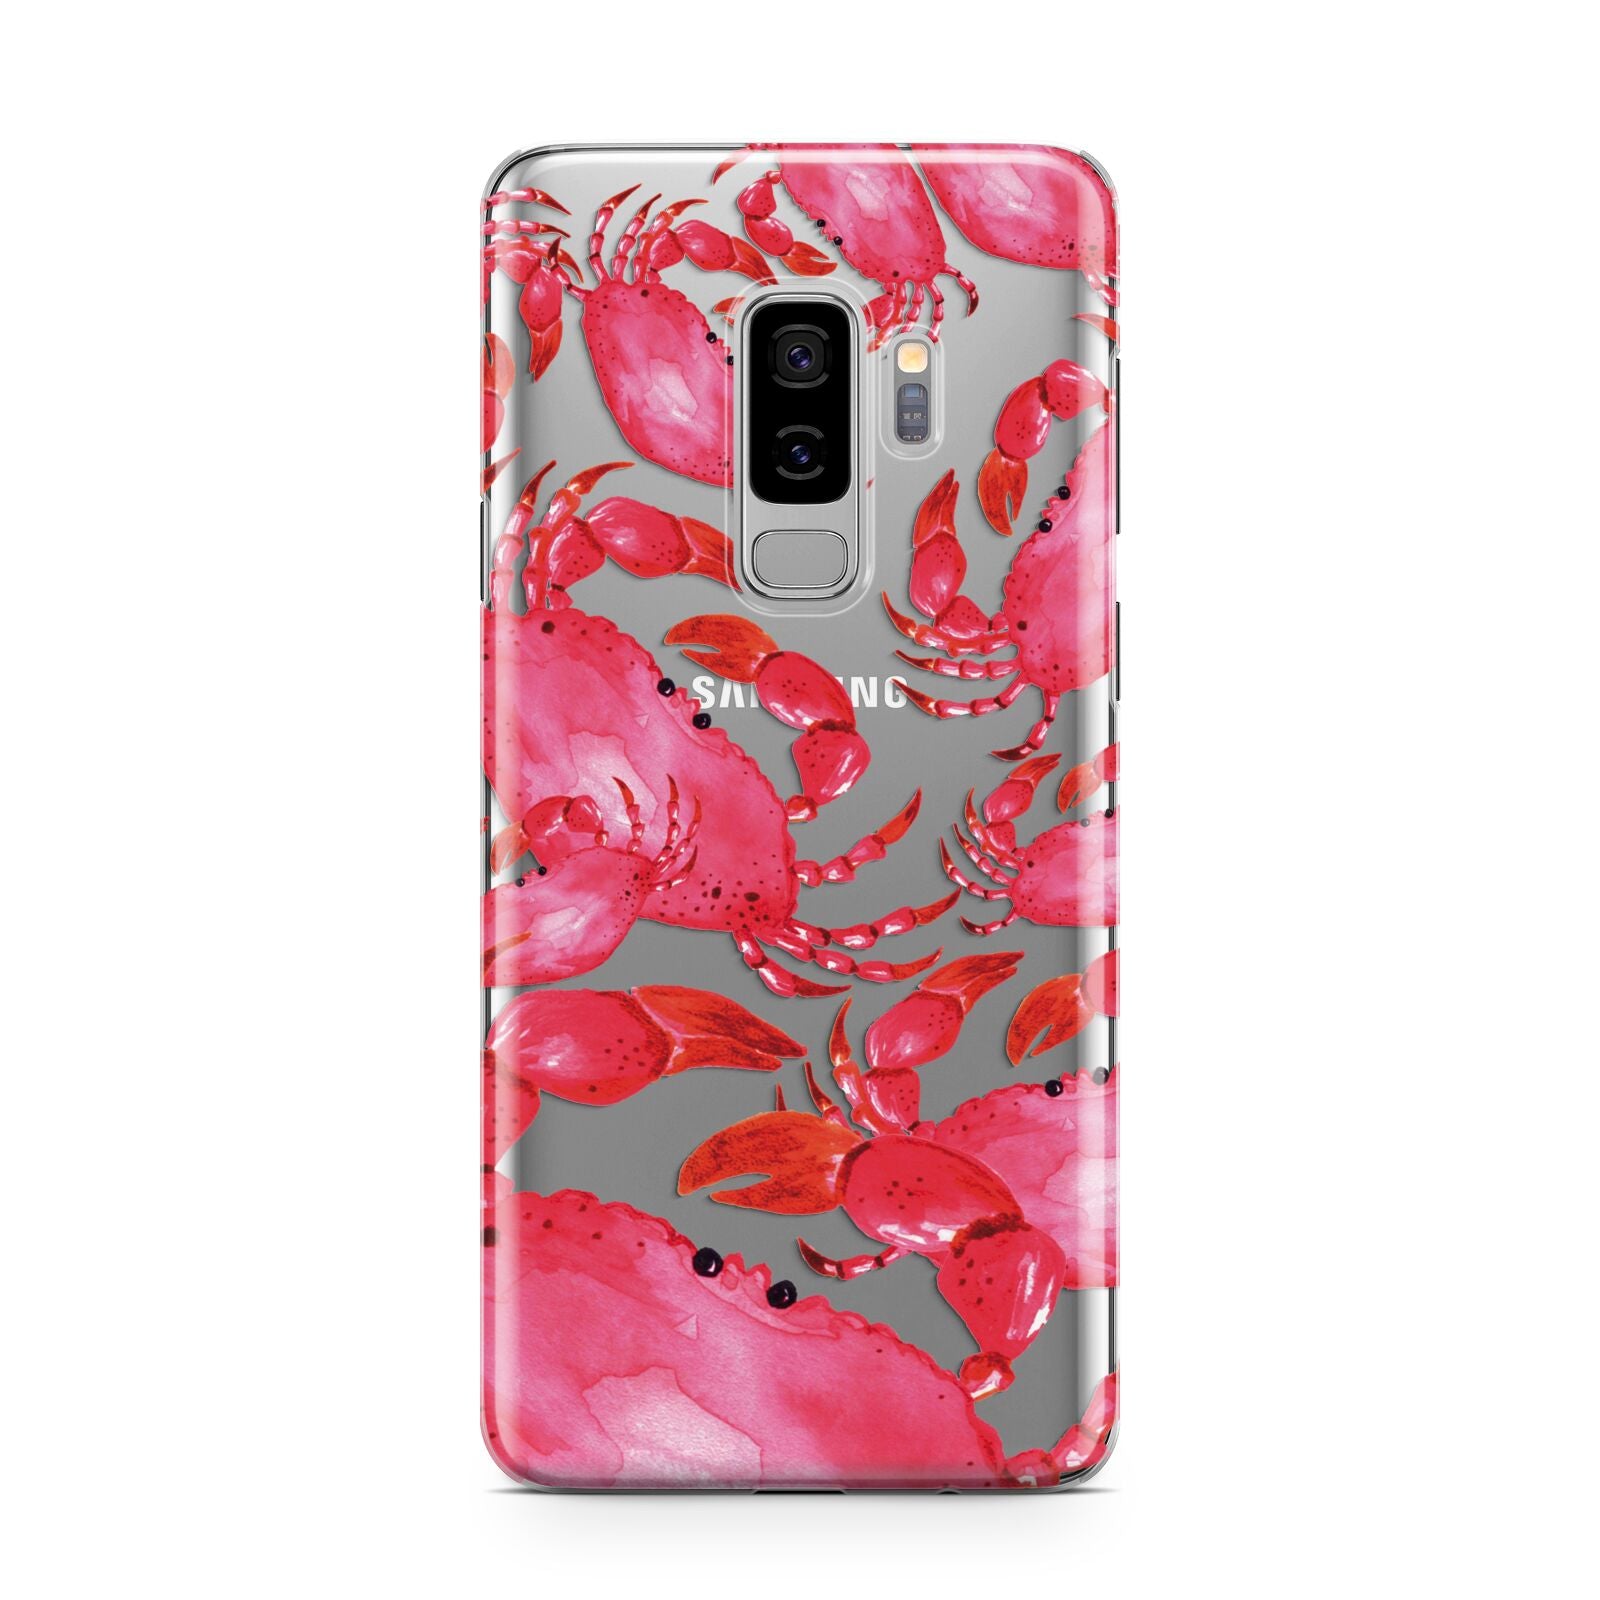 Crab Samsung Galaxy S9 Plus Case on Silver phone